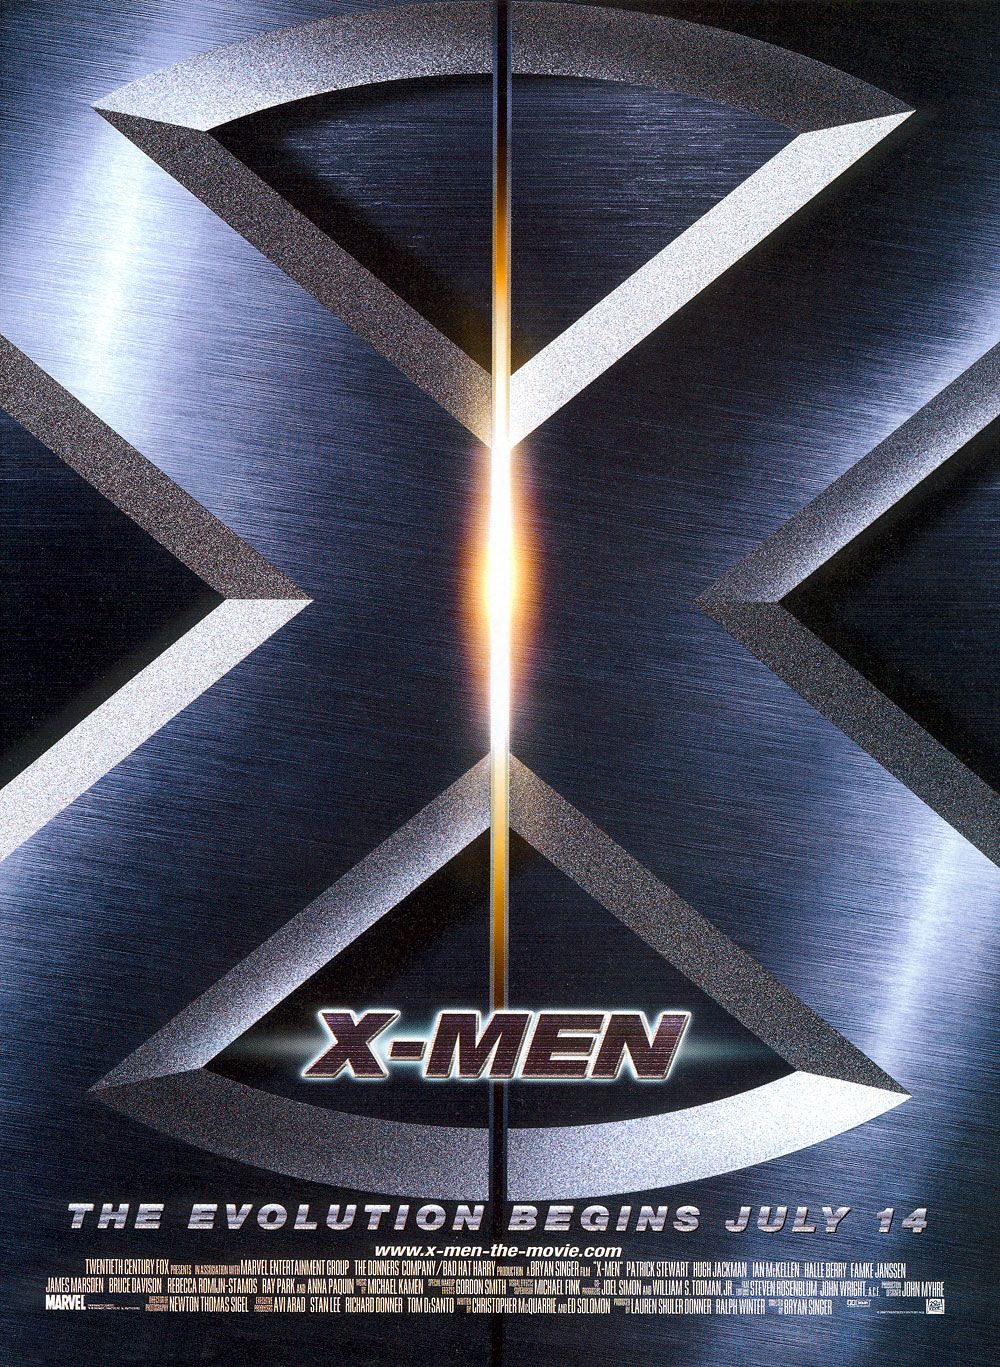 Comic Shop Girl Confessions X-Men 2000 Bryan Singer